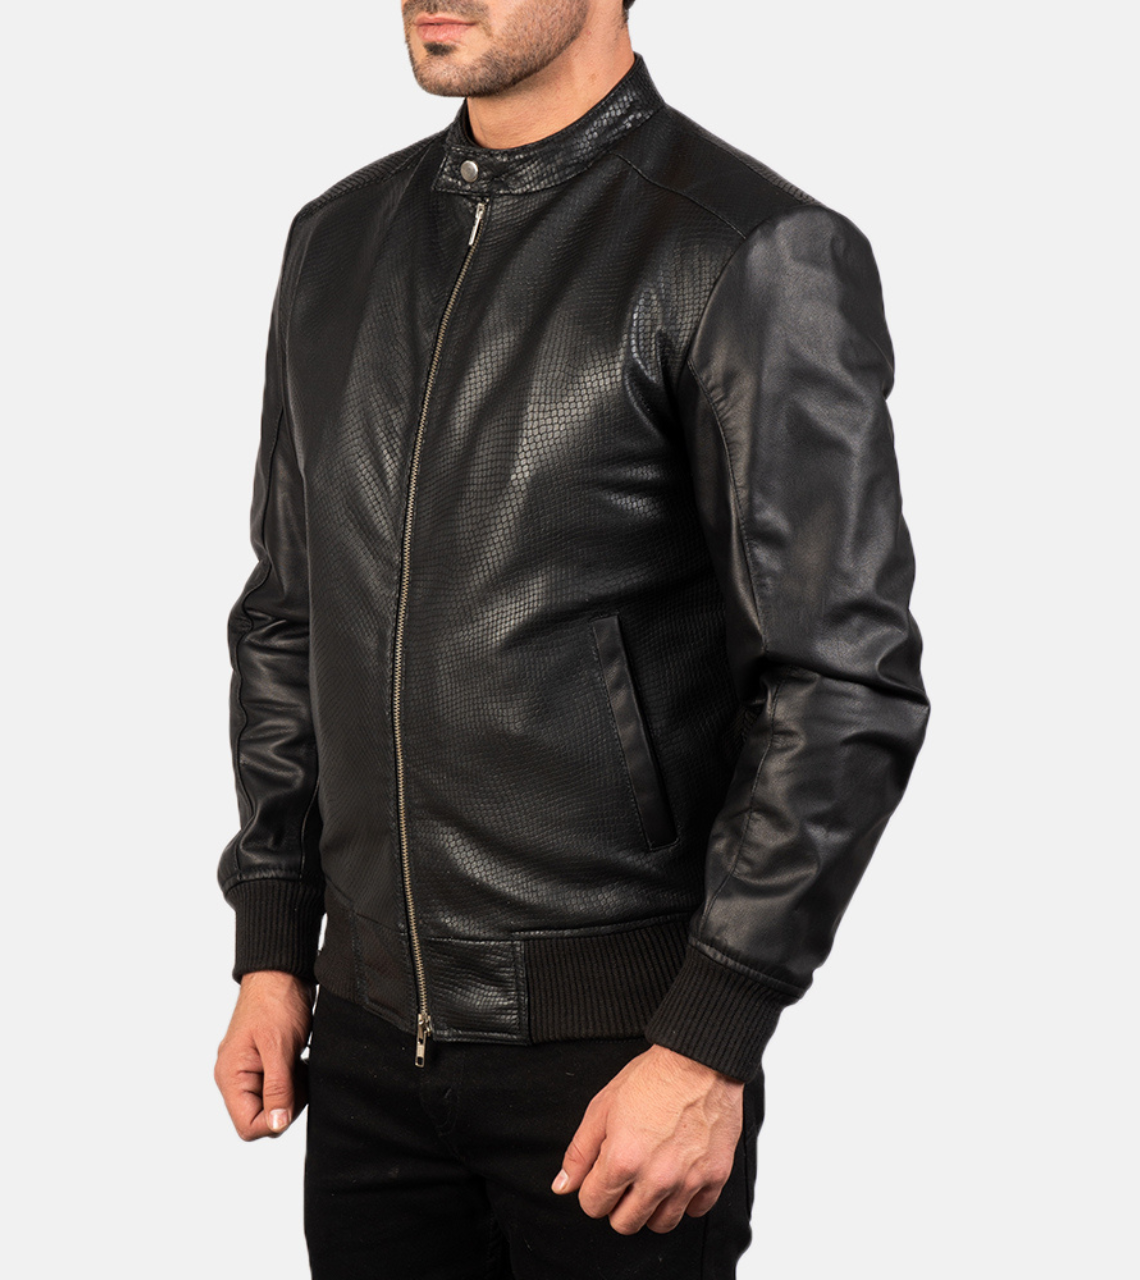  Men's Leather Bomber Jacket